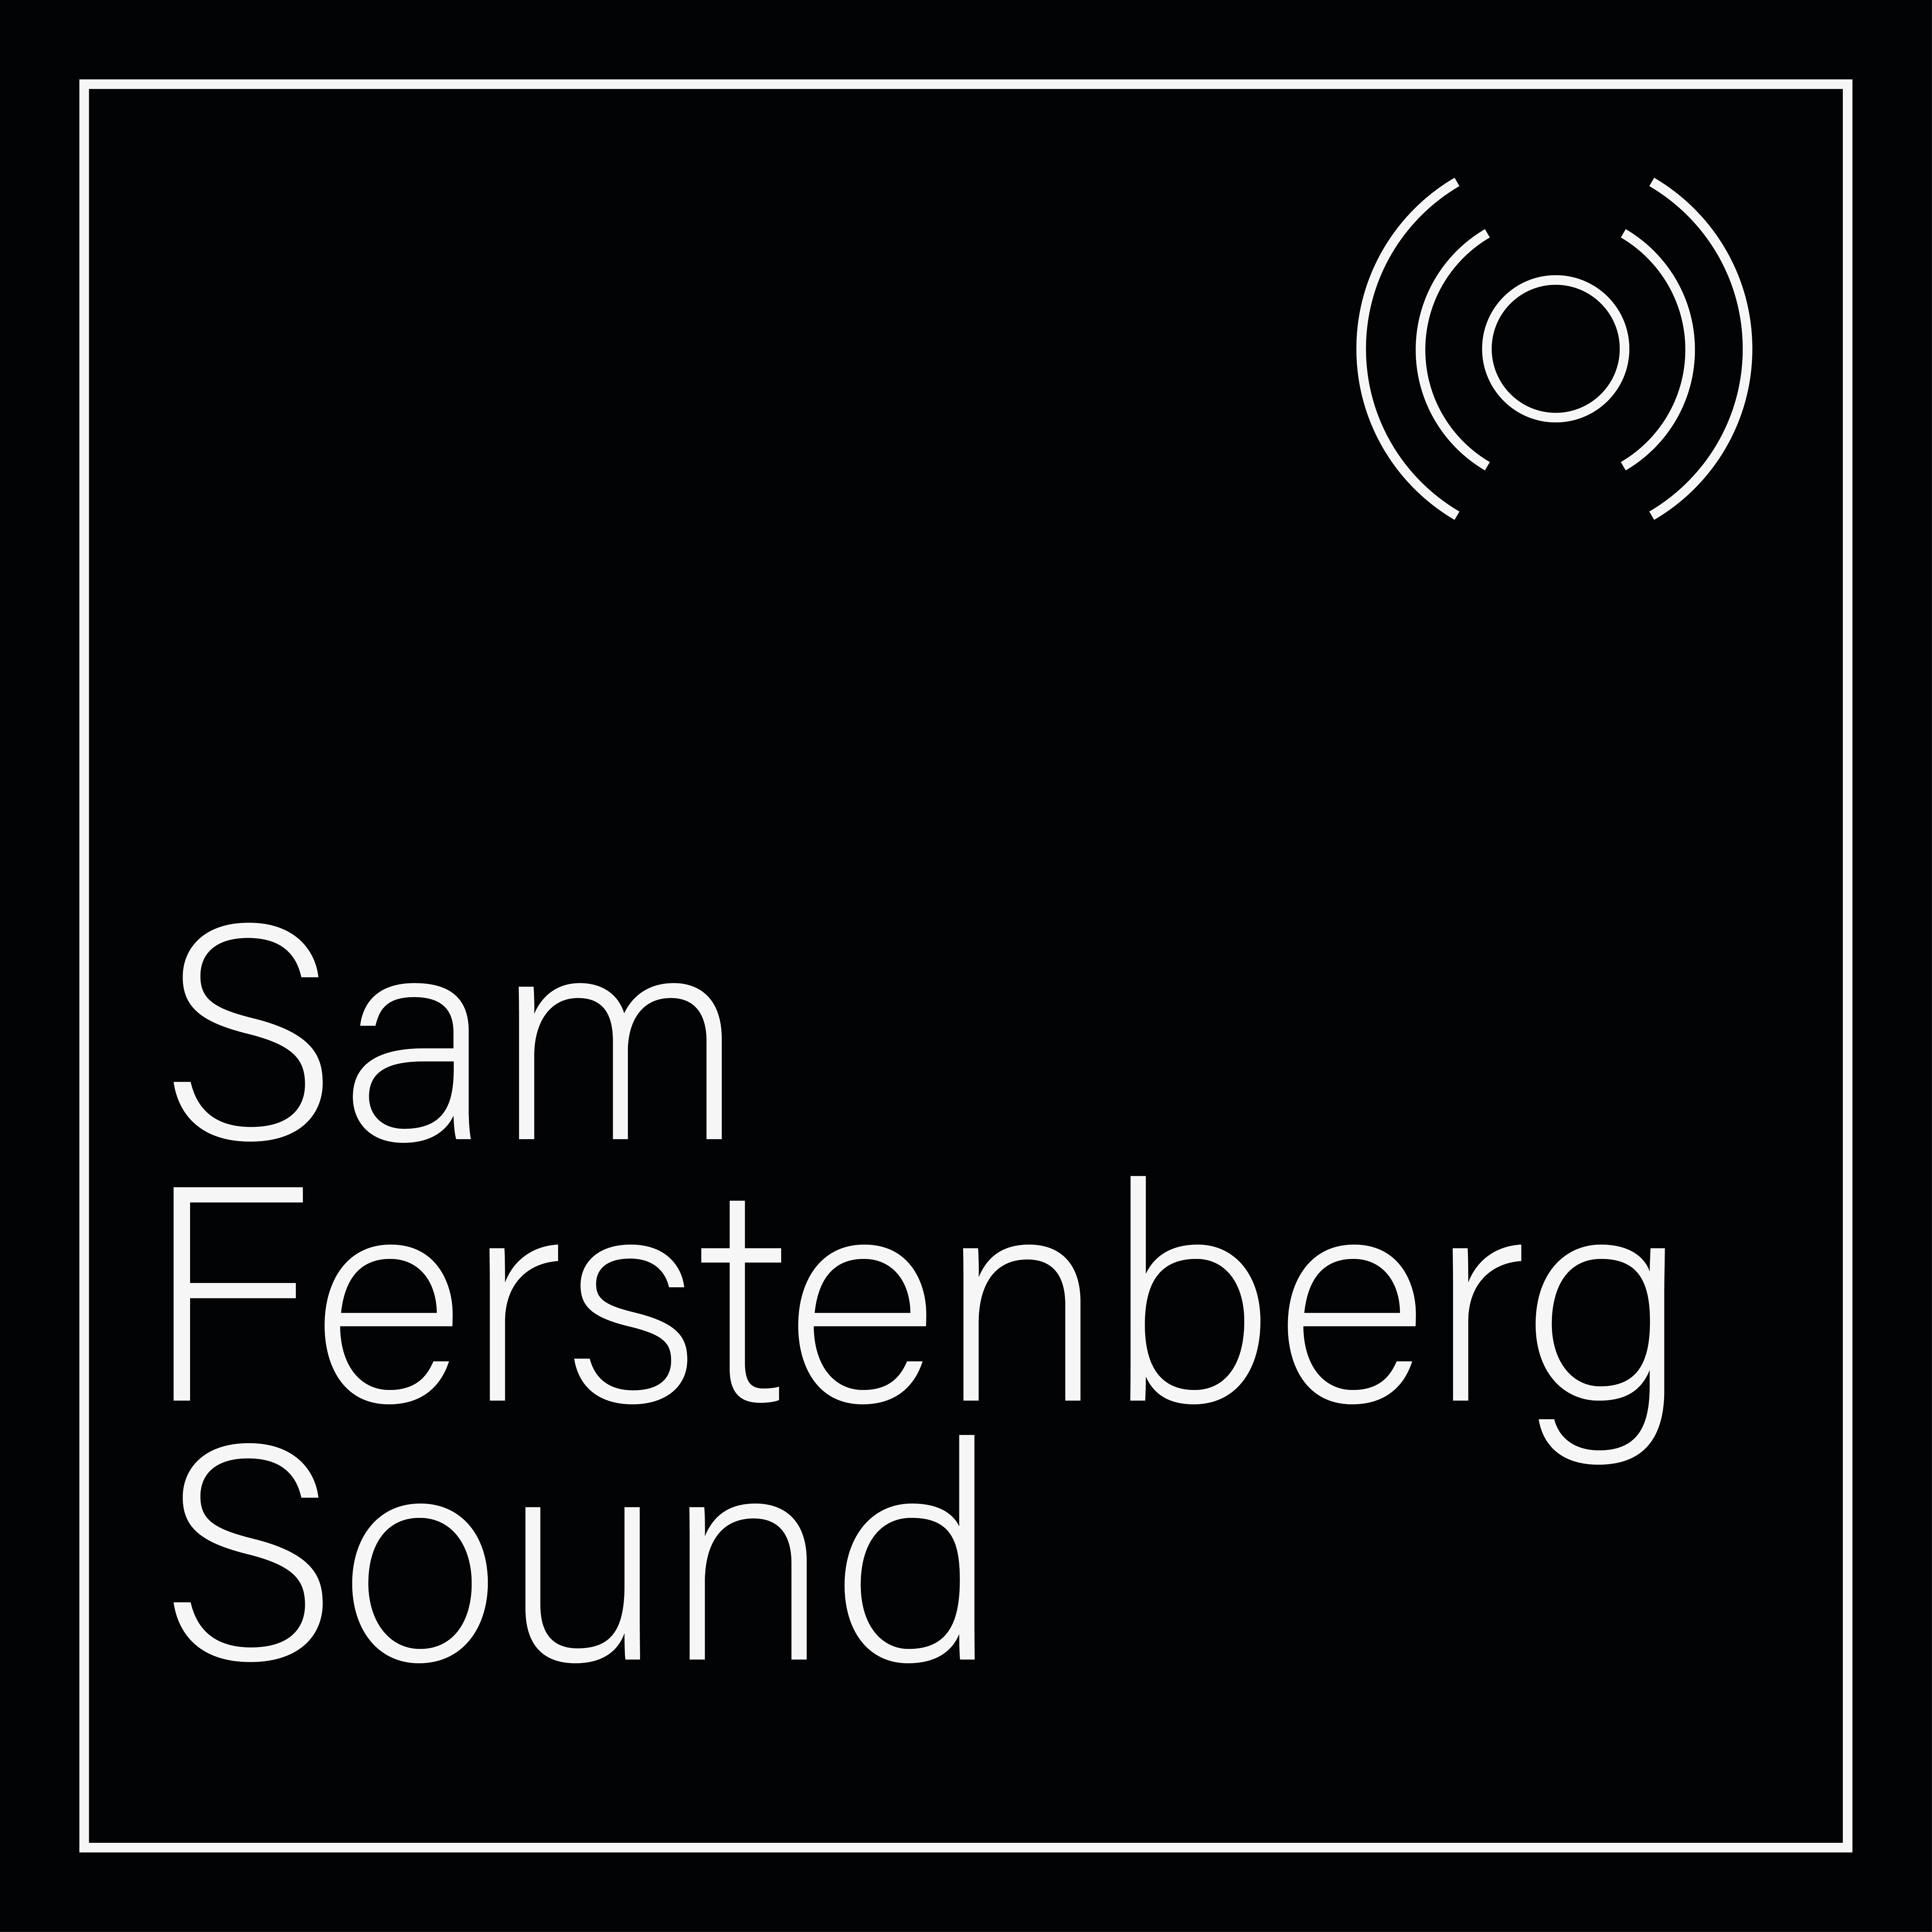 Sam Ferstenberg